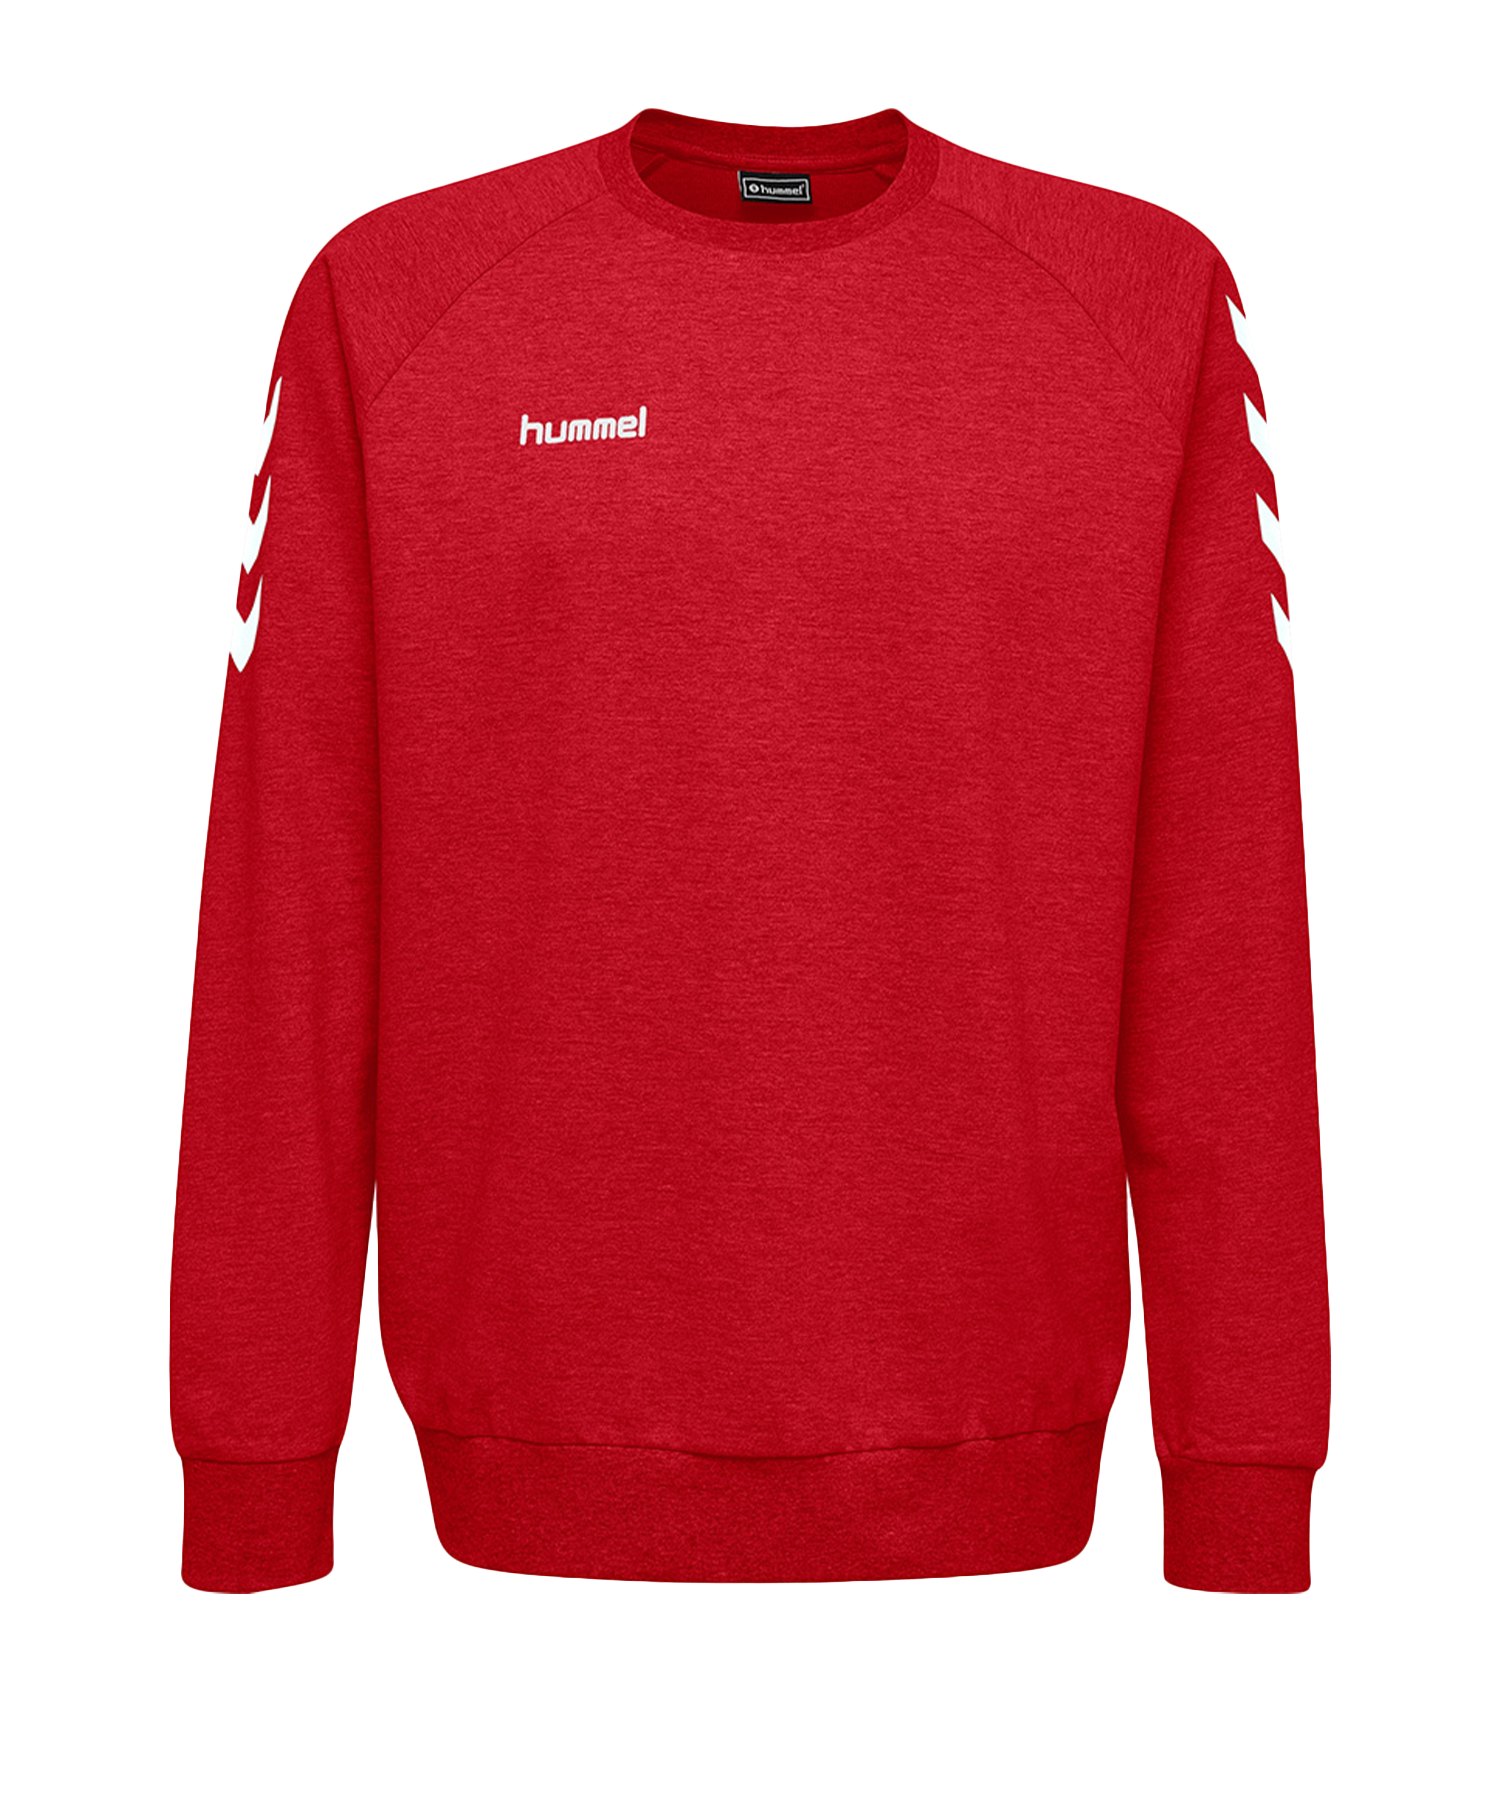 Hummel Cotton Sweatshirt Rot F3062 - Rot